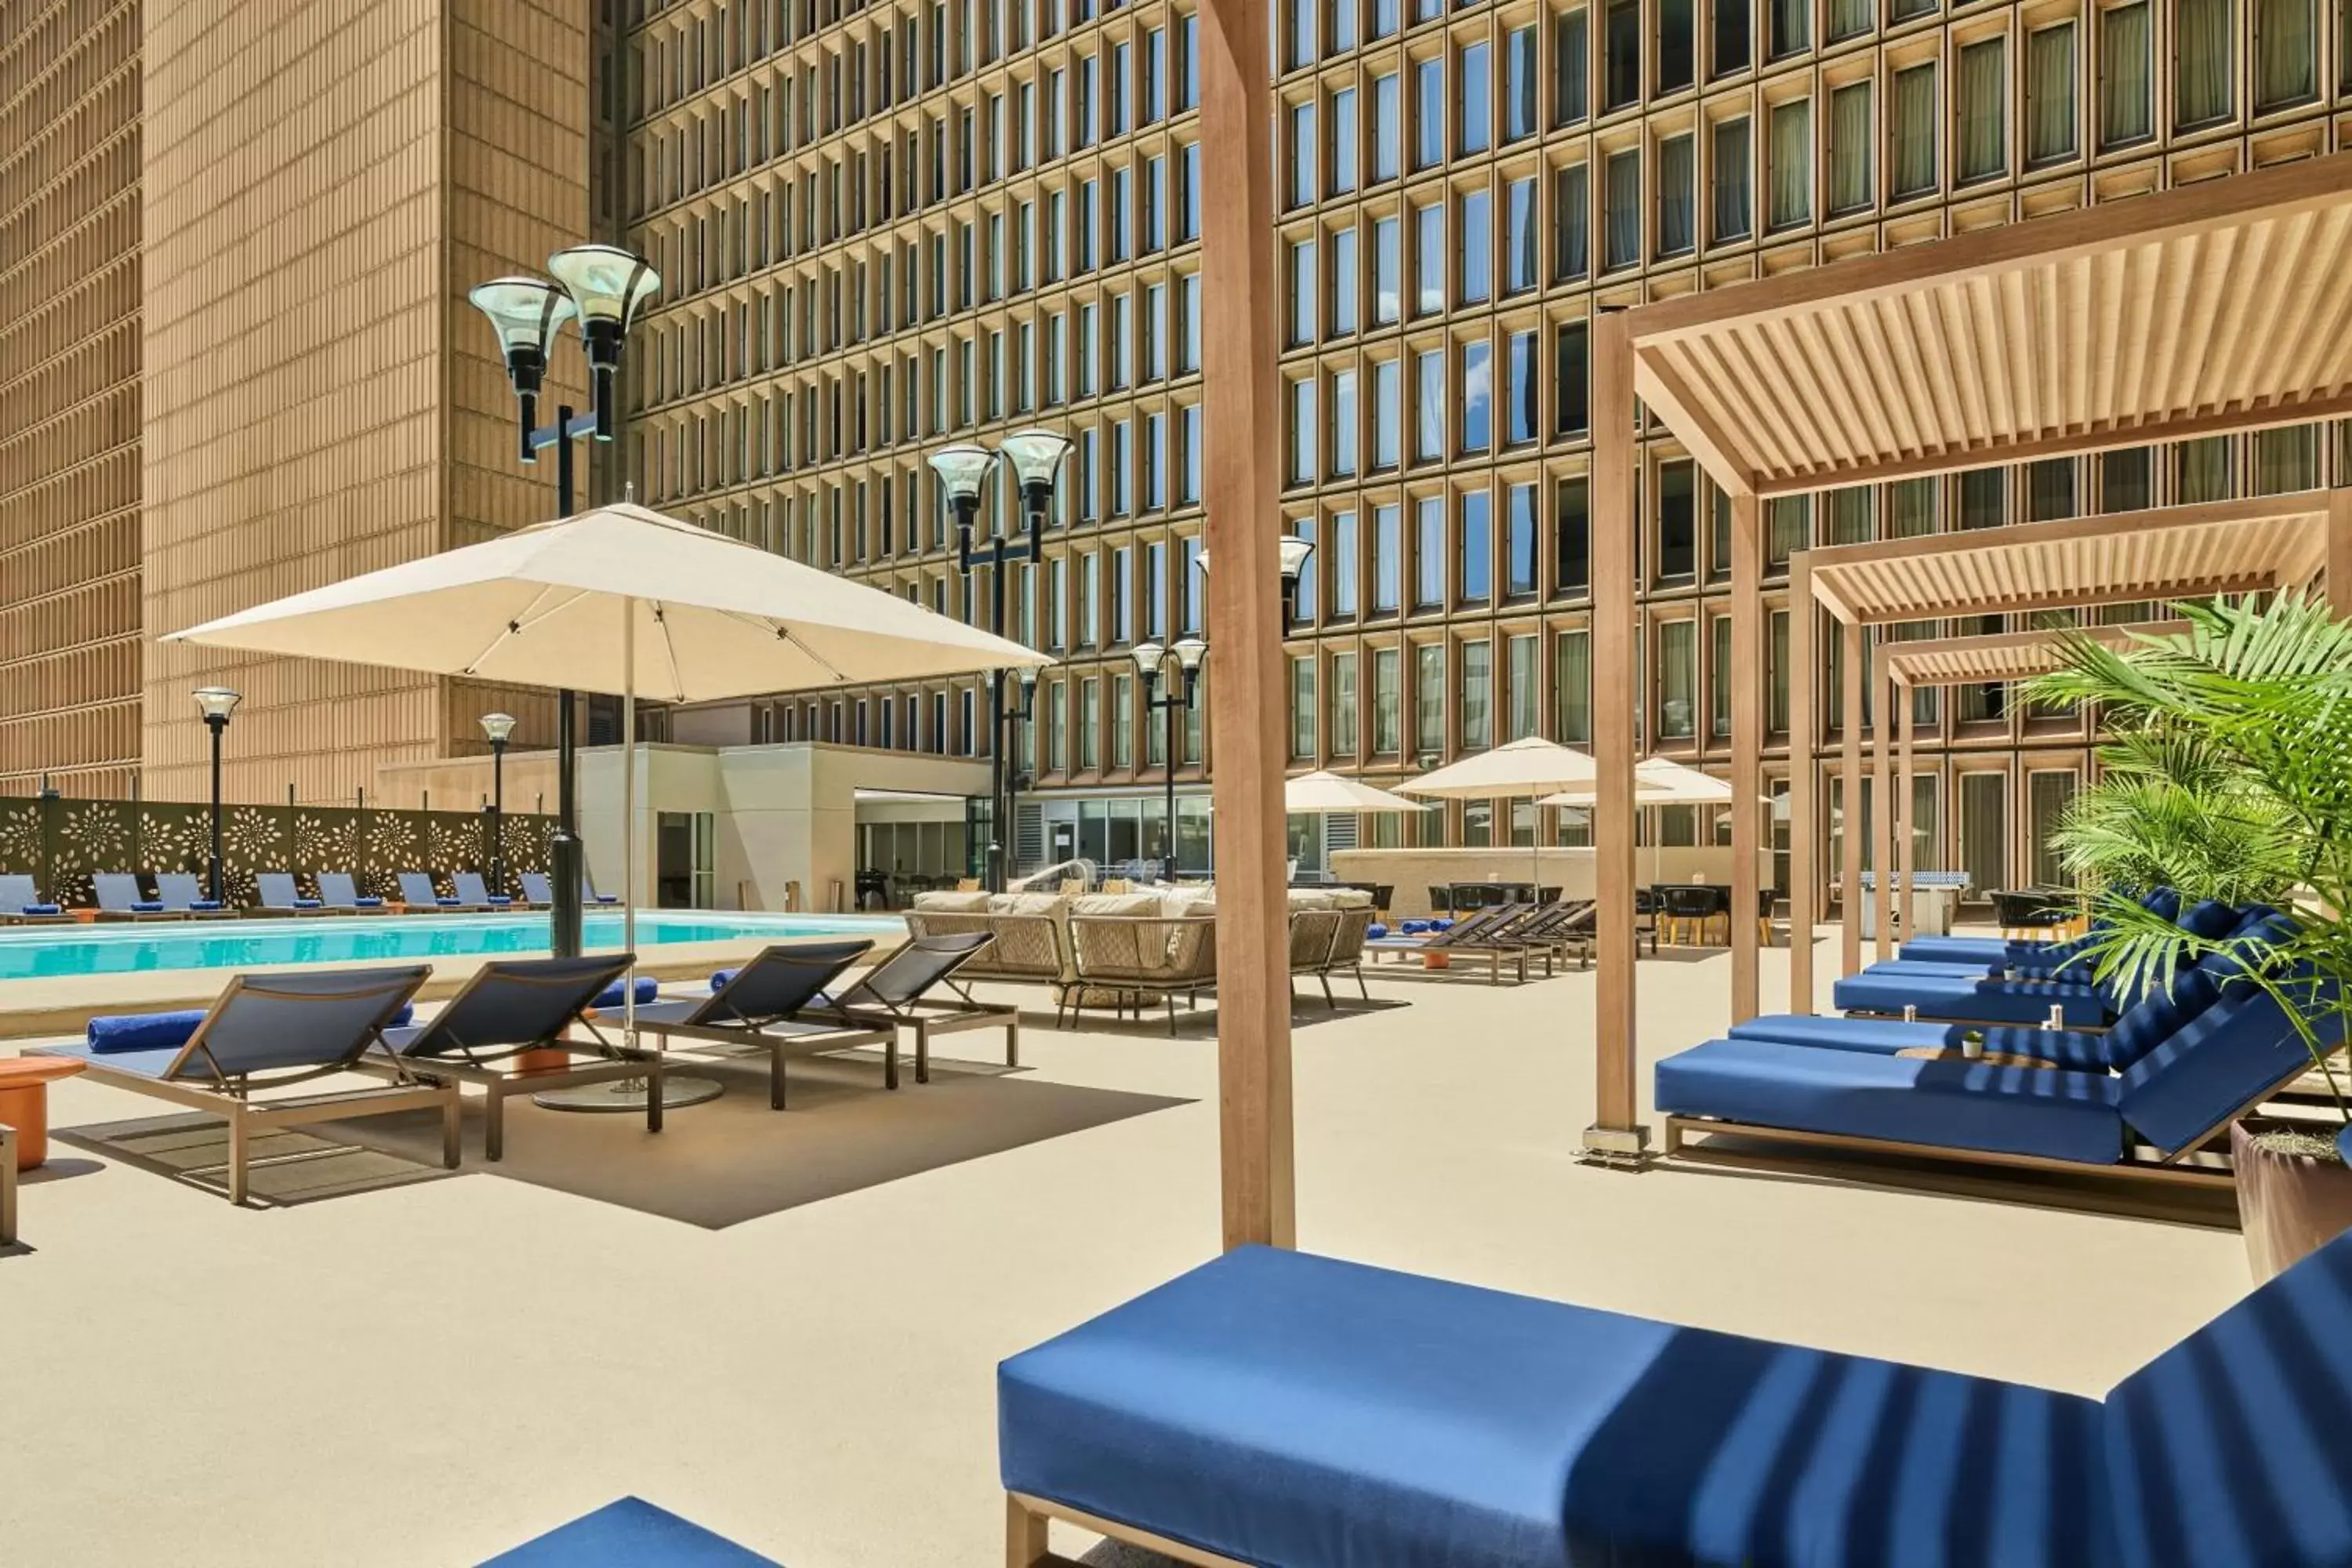 Swimming pool in Sheraton Denver Downtown Hotel